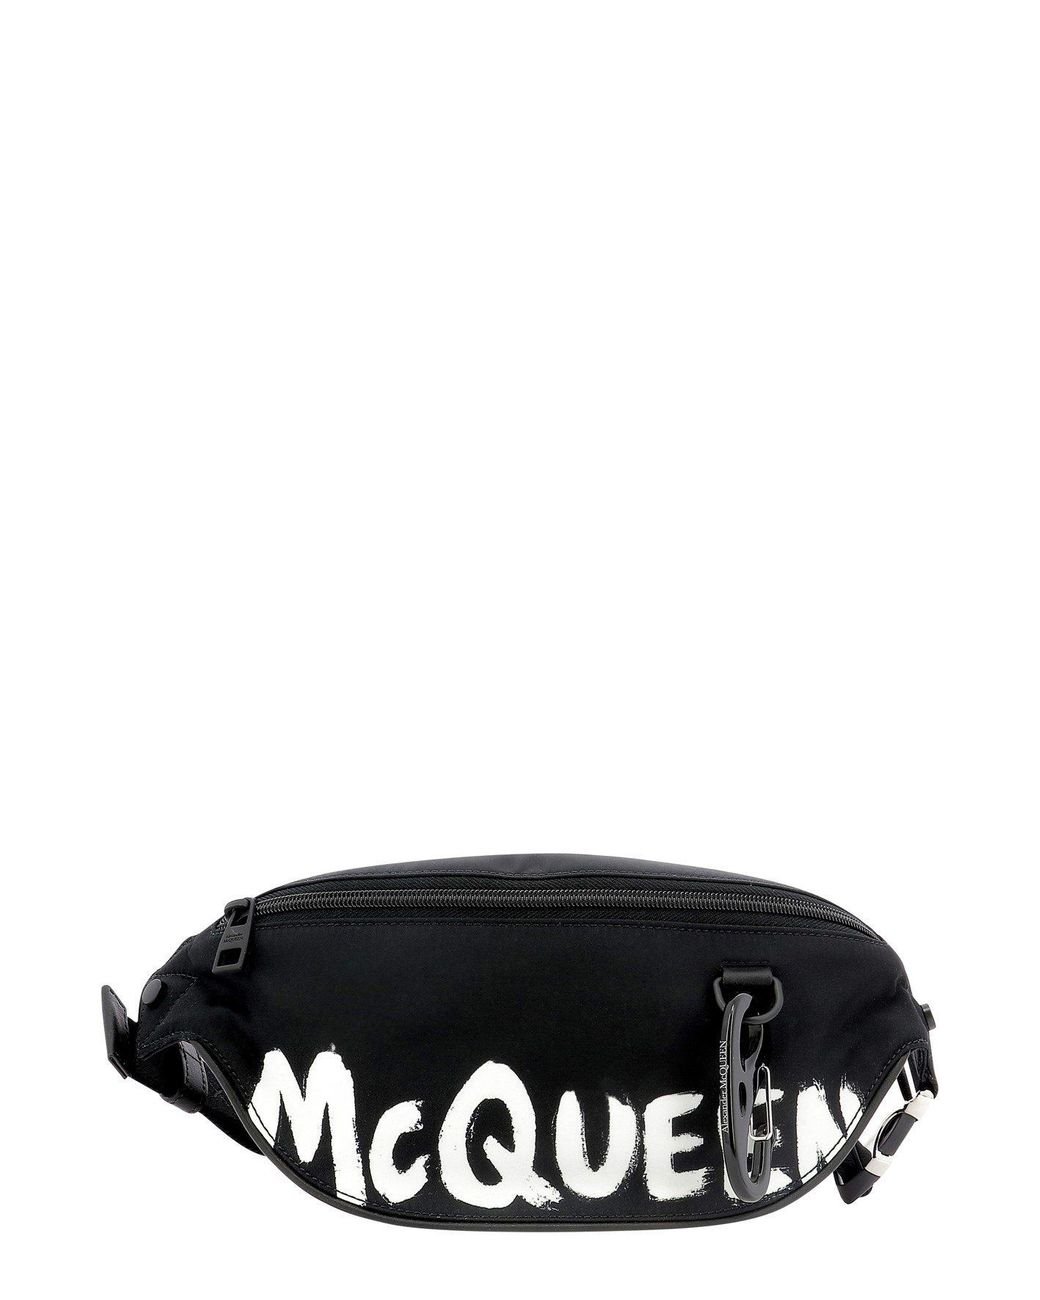 Alexander McQueen Synthetic Graffiti Fanny Pack in Black for Men - Lyst